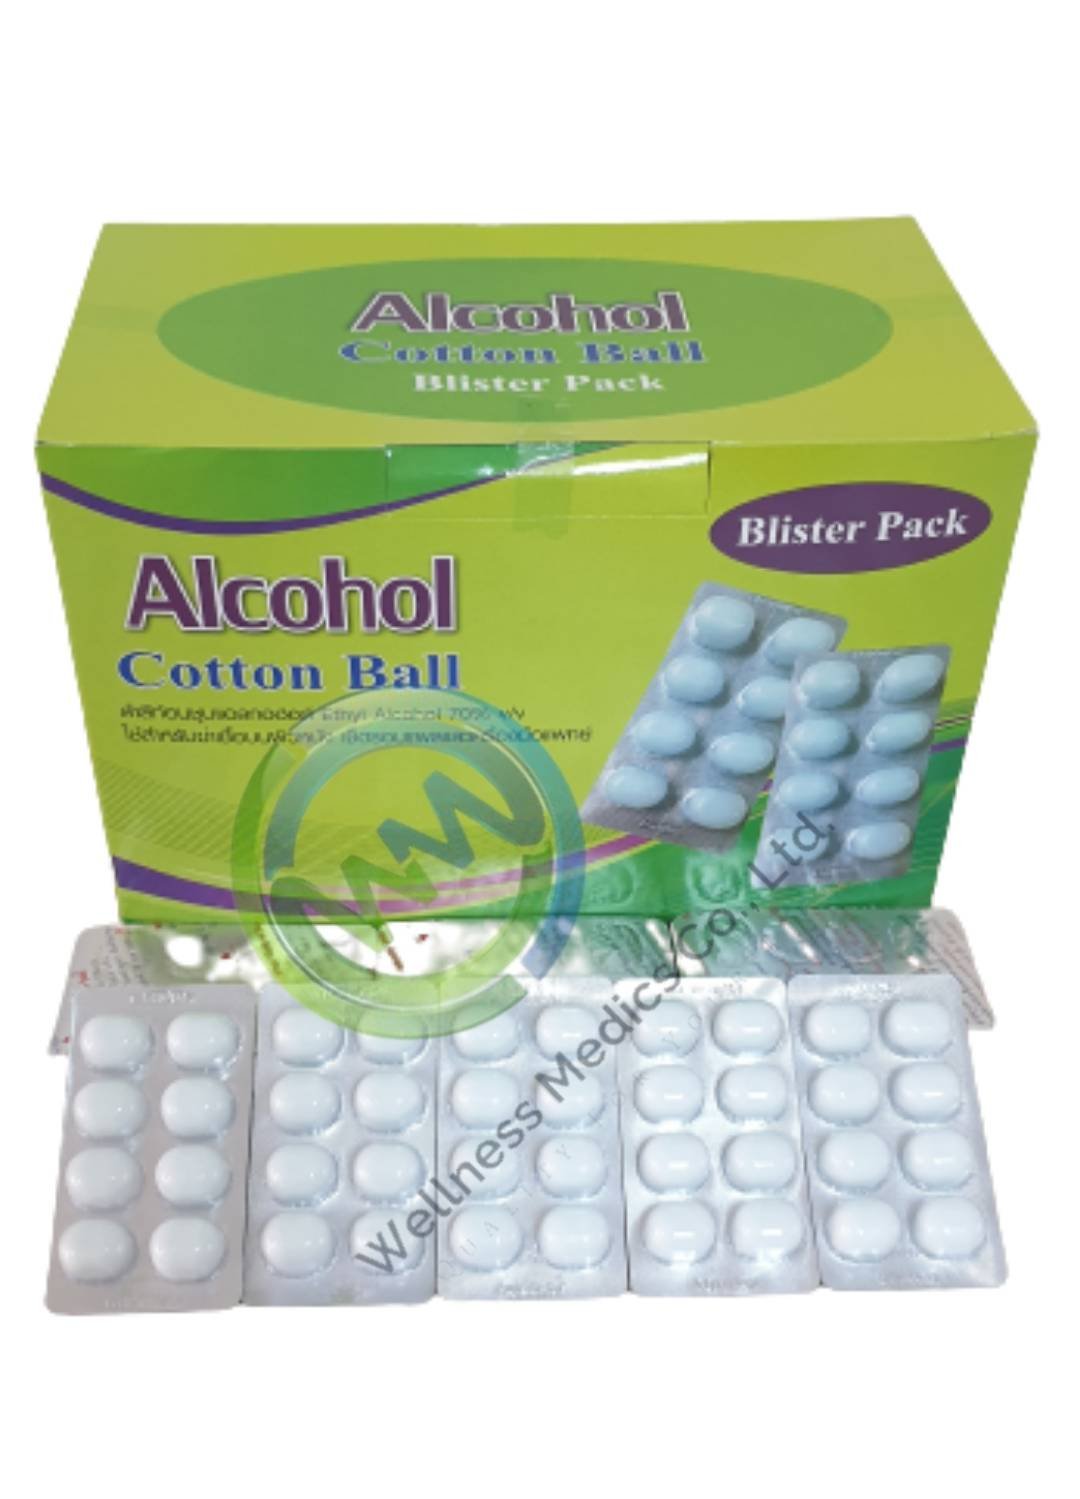 Alcohol Cotton Ball สำลีชุบแอลกอฮอล์ Blister Pack ก้อน (100 แผง/กล่อง)